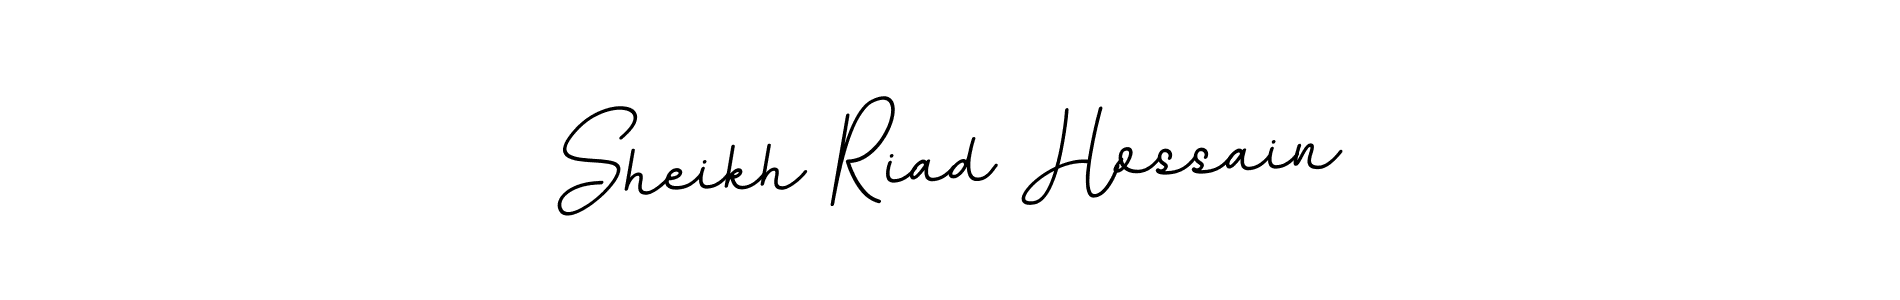 How to Draw Sheikh Riad Hossain signature style? BallpointsItalic-DORy9 is a latest design signature styles for name Sheikh Riad Hossain. Sheikh Riad Hossain signature style 11 images and pictures png